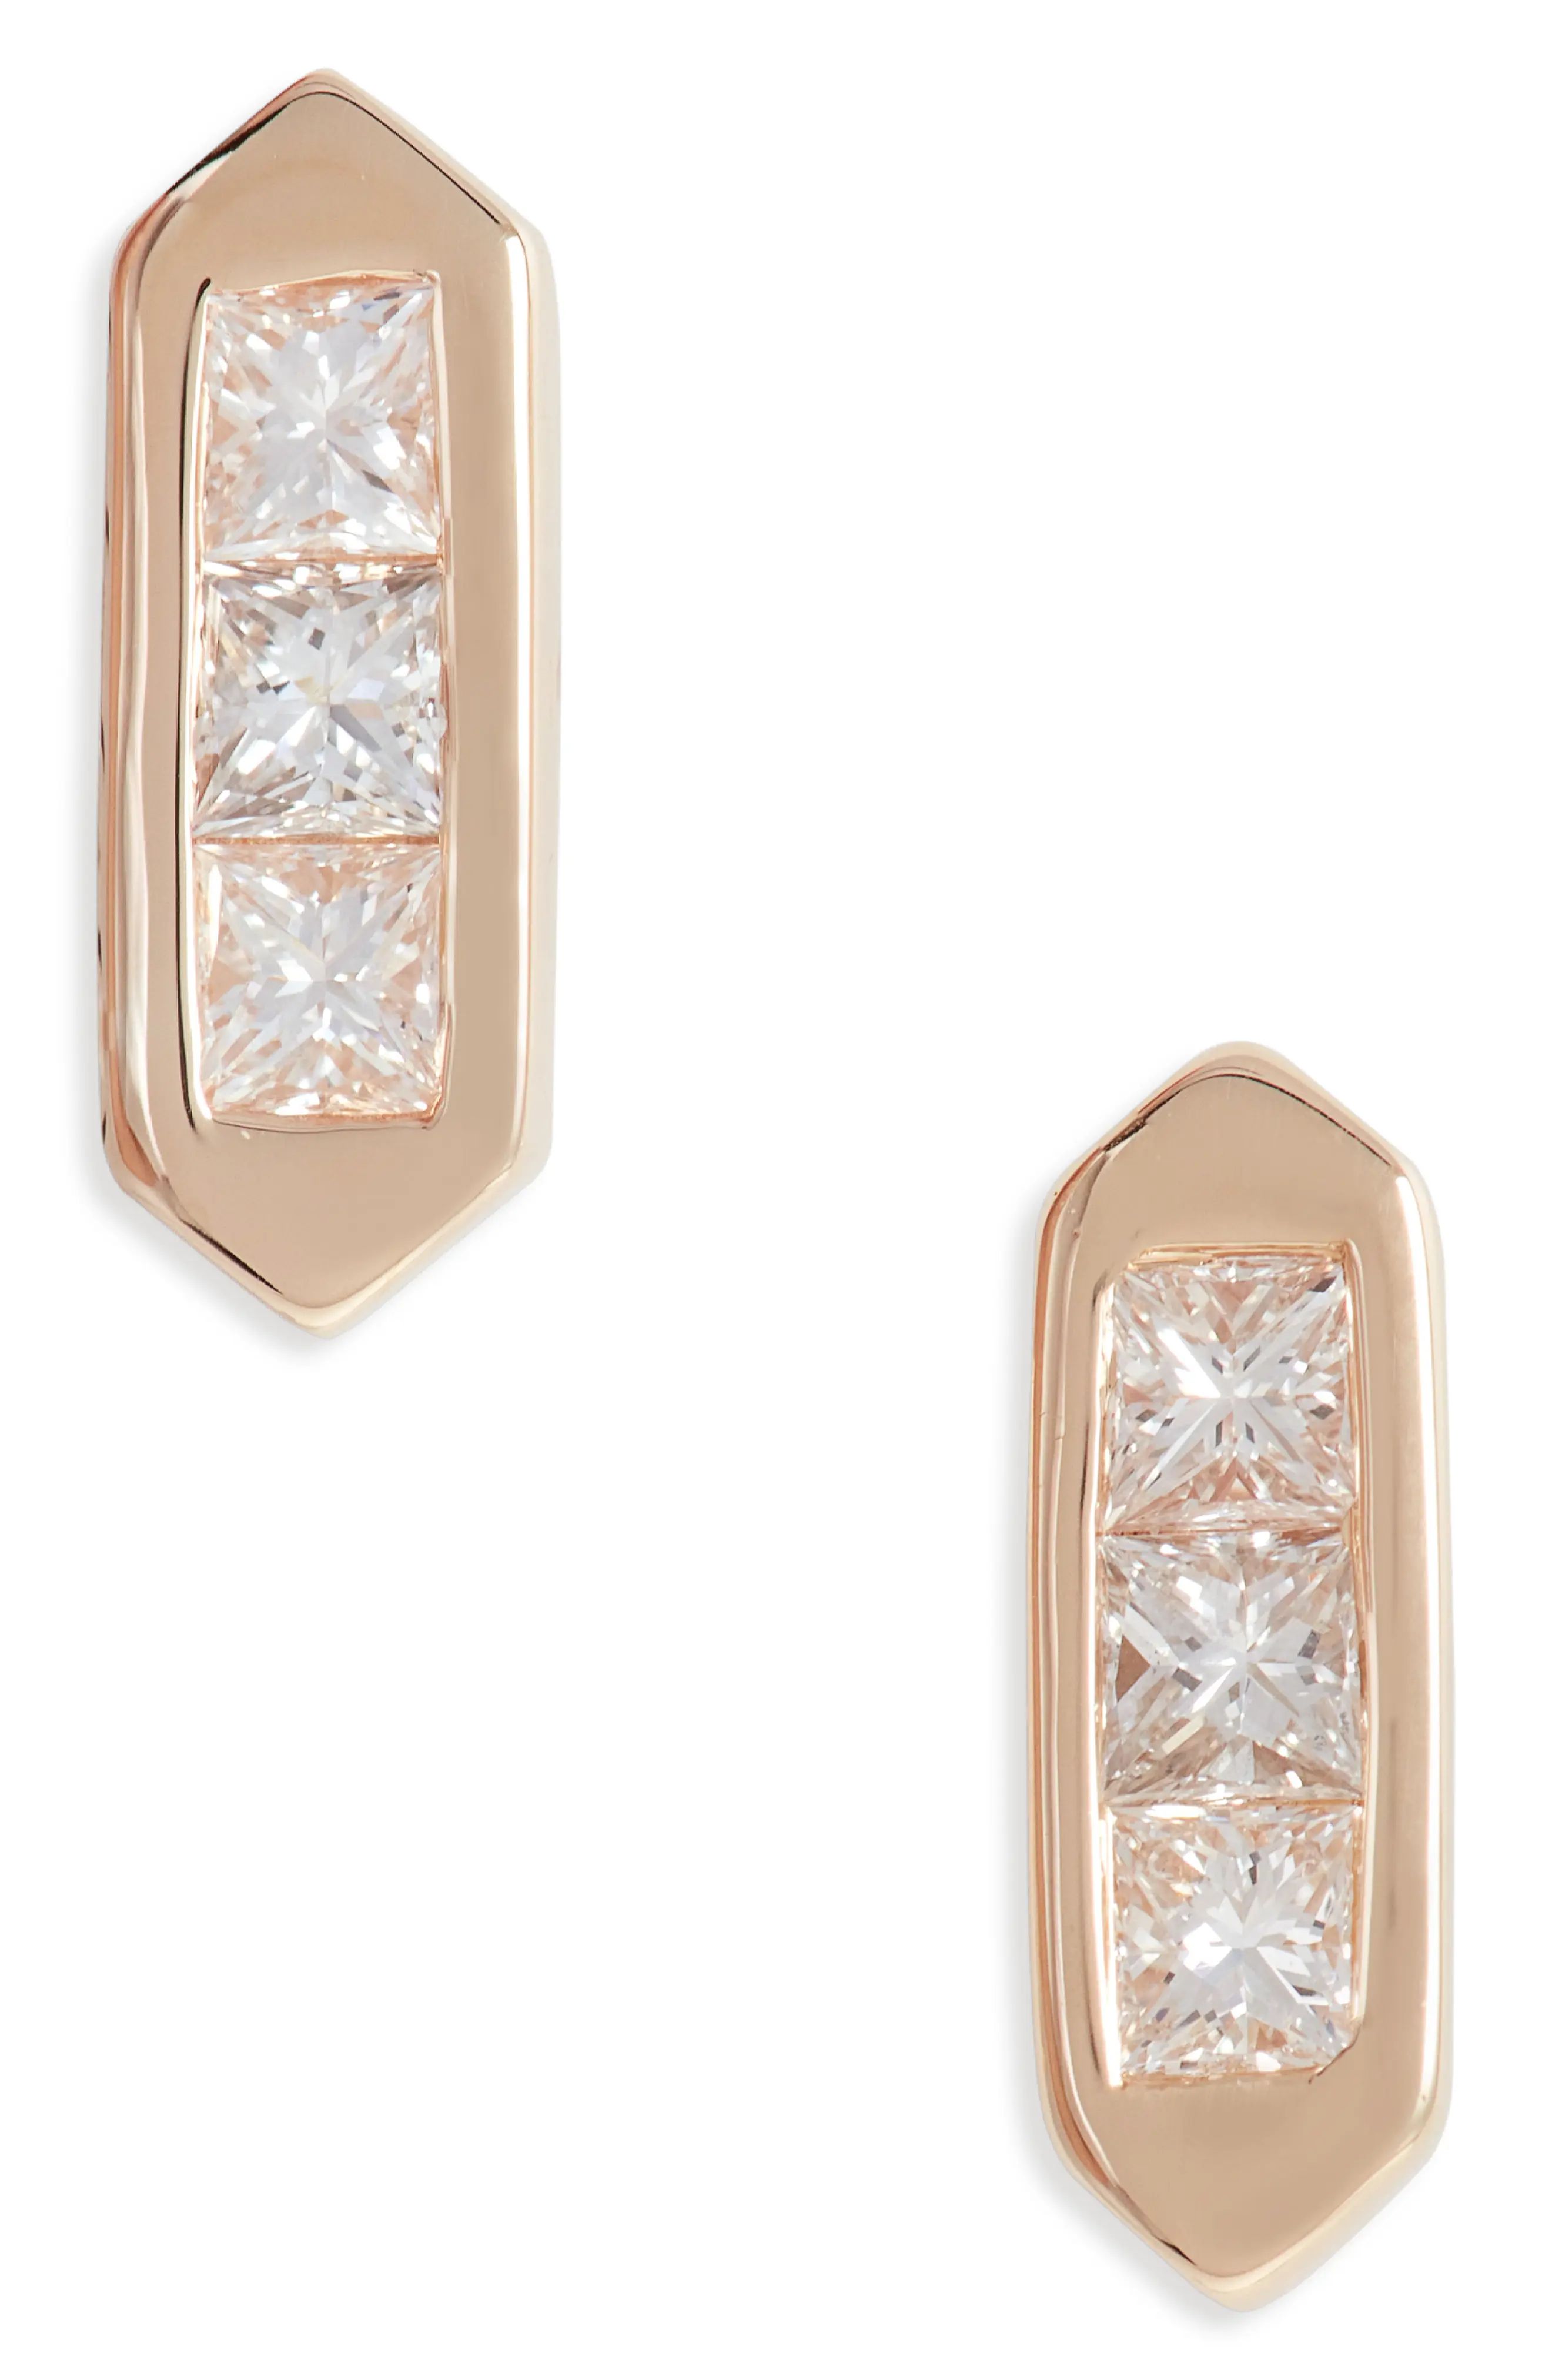 Dana Rebecca Designs Millie Ryan Diamond Bar Stud Earrings in Yellow Gold at Nordstrom | Nordstrom